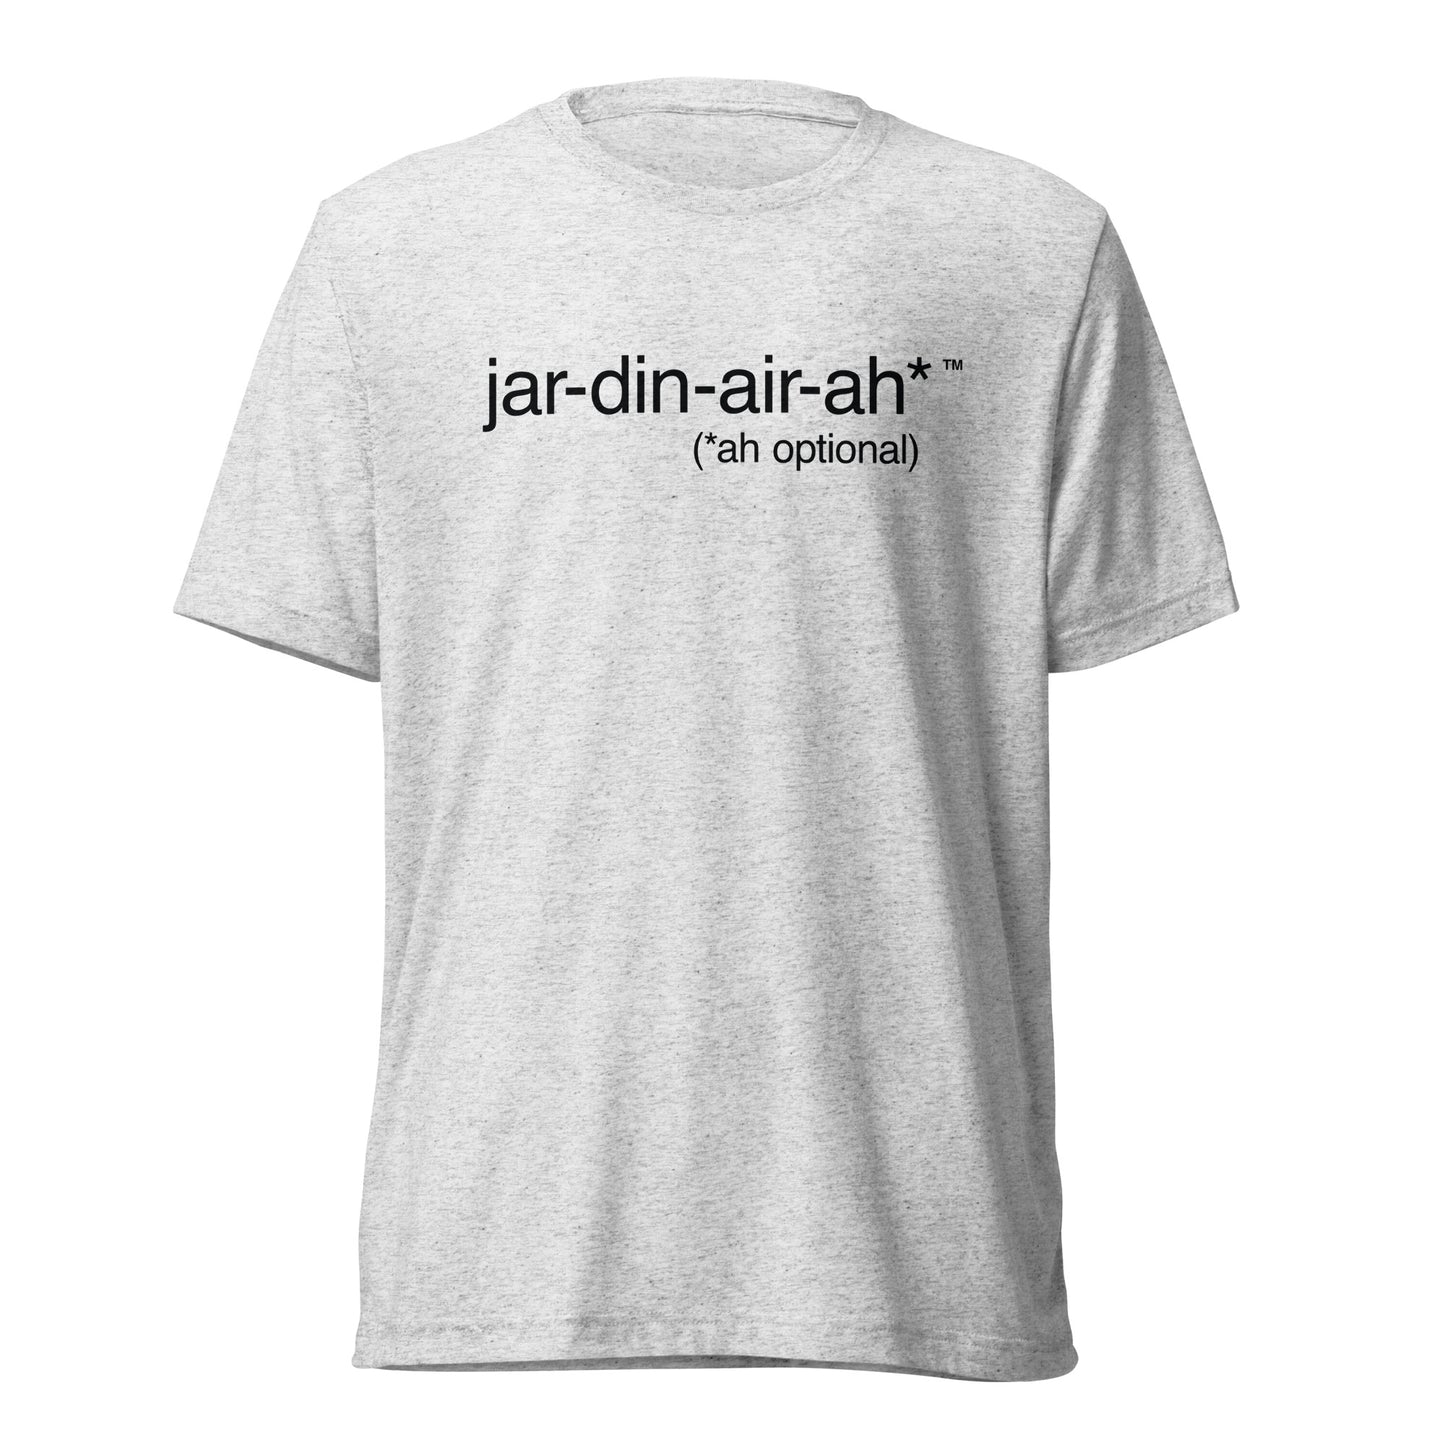 JAR-DIN-AIR-AH* - Tri-blend Short sleeve t-shirt